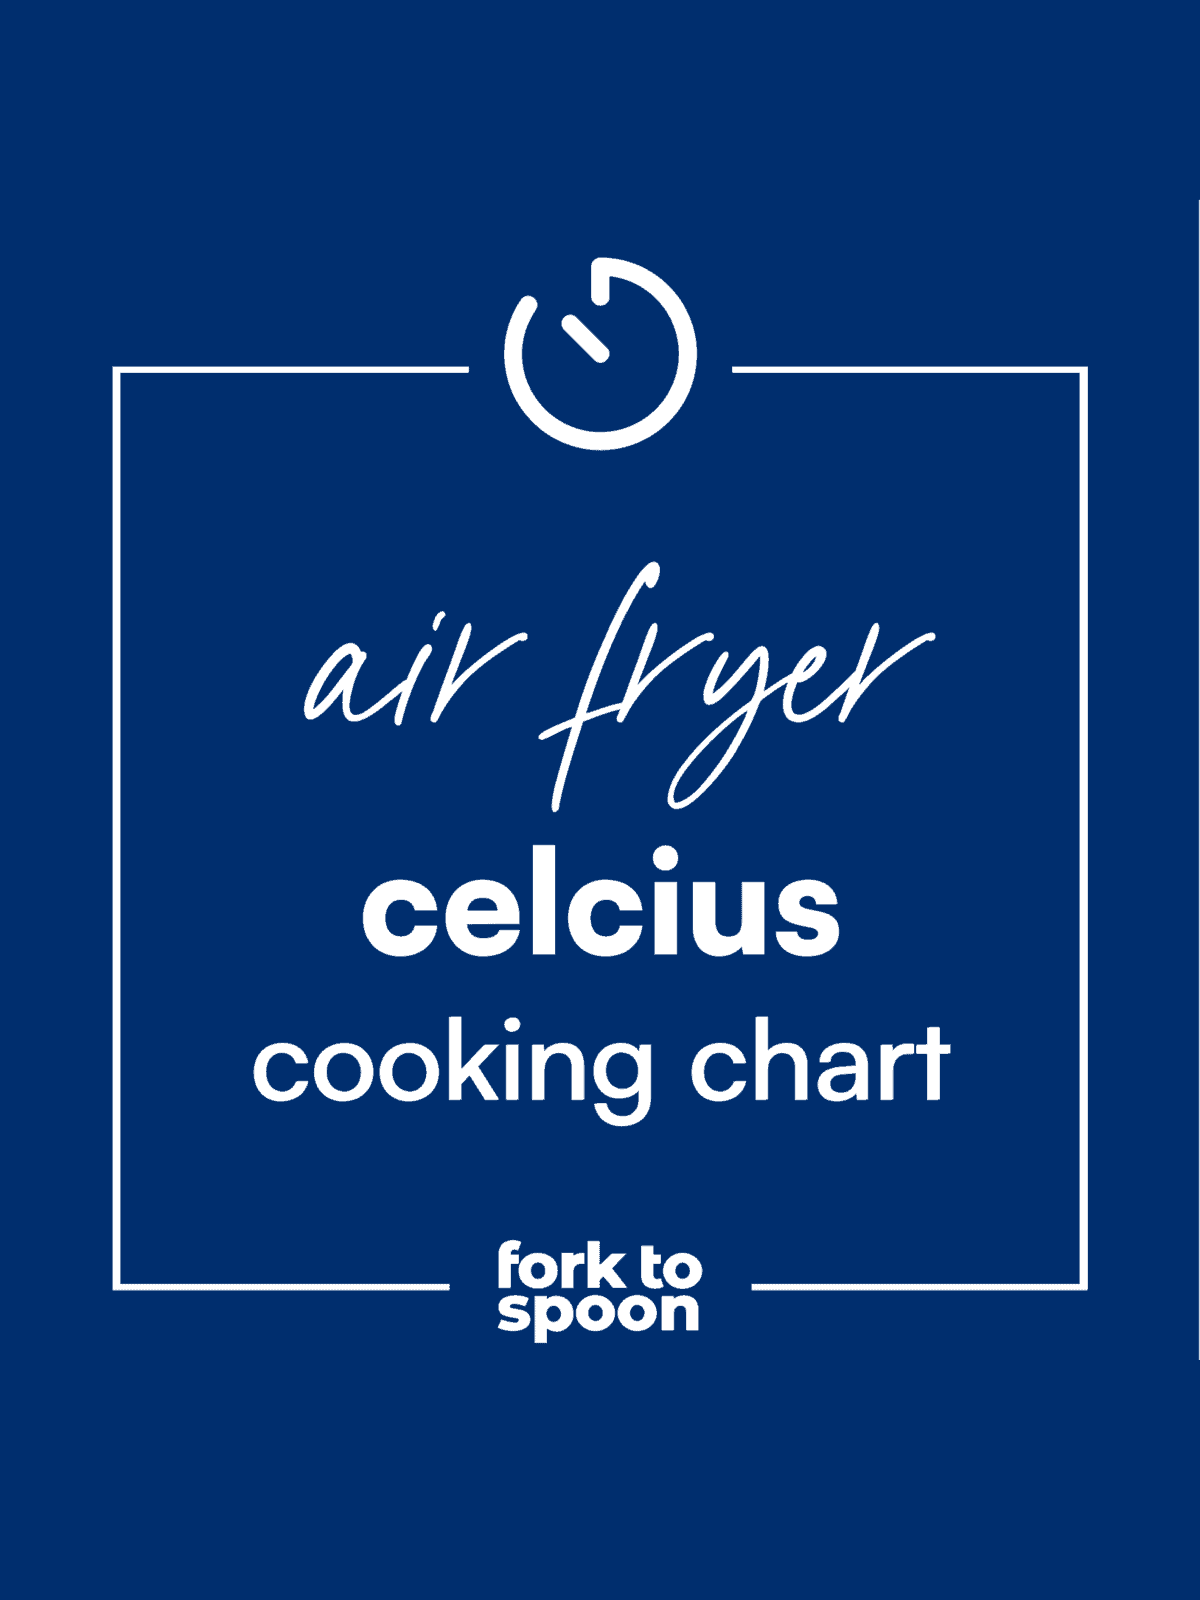 https://forktospoon.com/wp-content/uploads/2020/03/air-fryer-celcius-cooking-chart-1.png